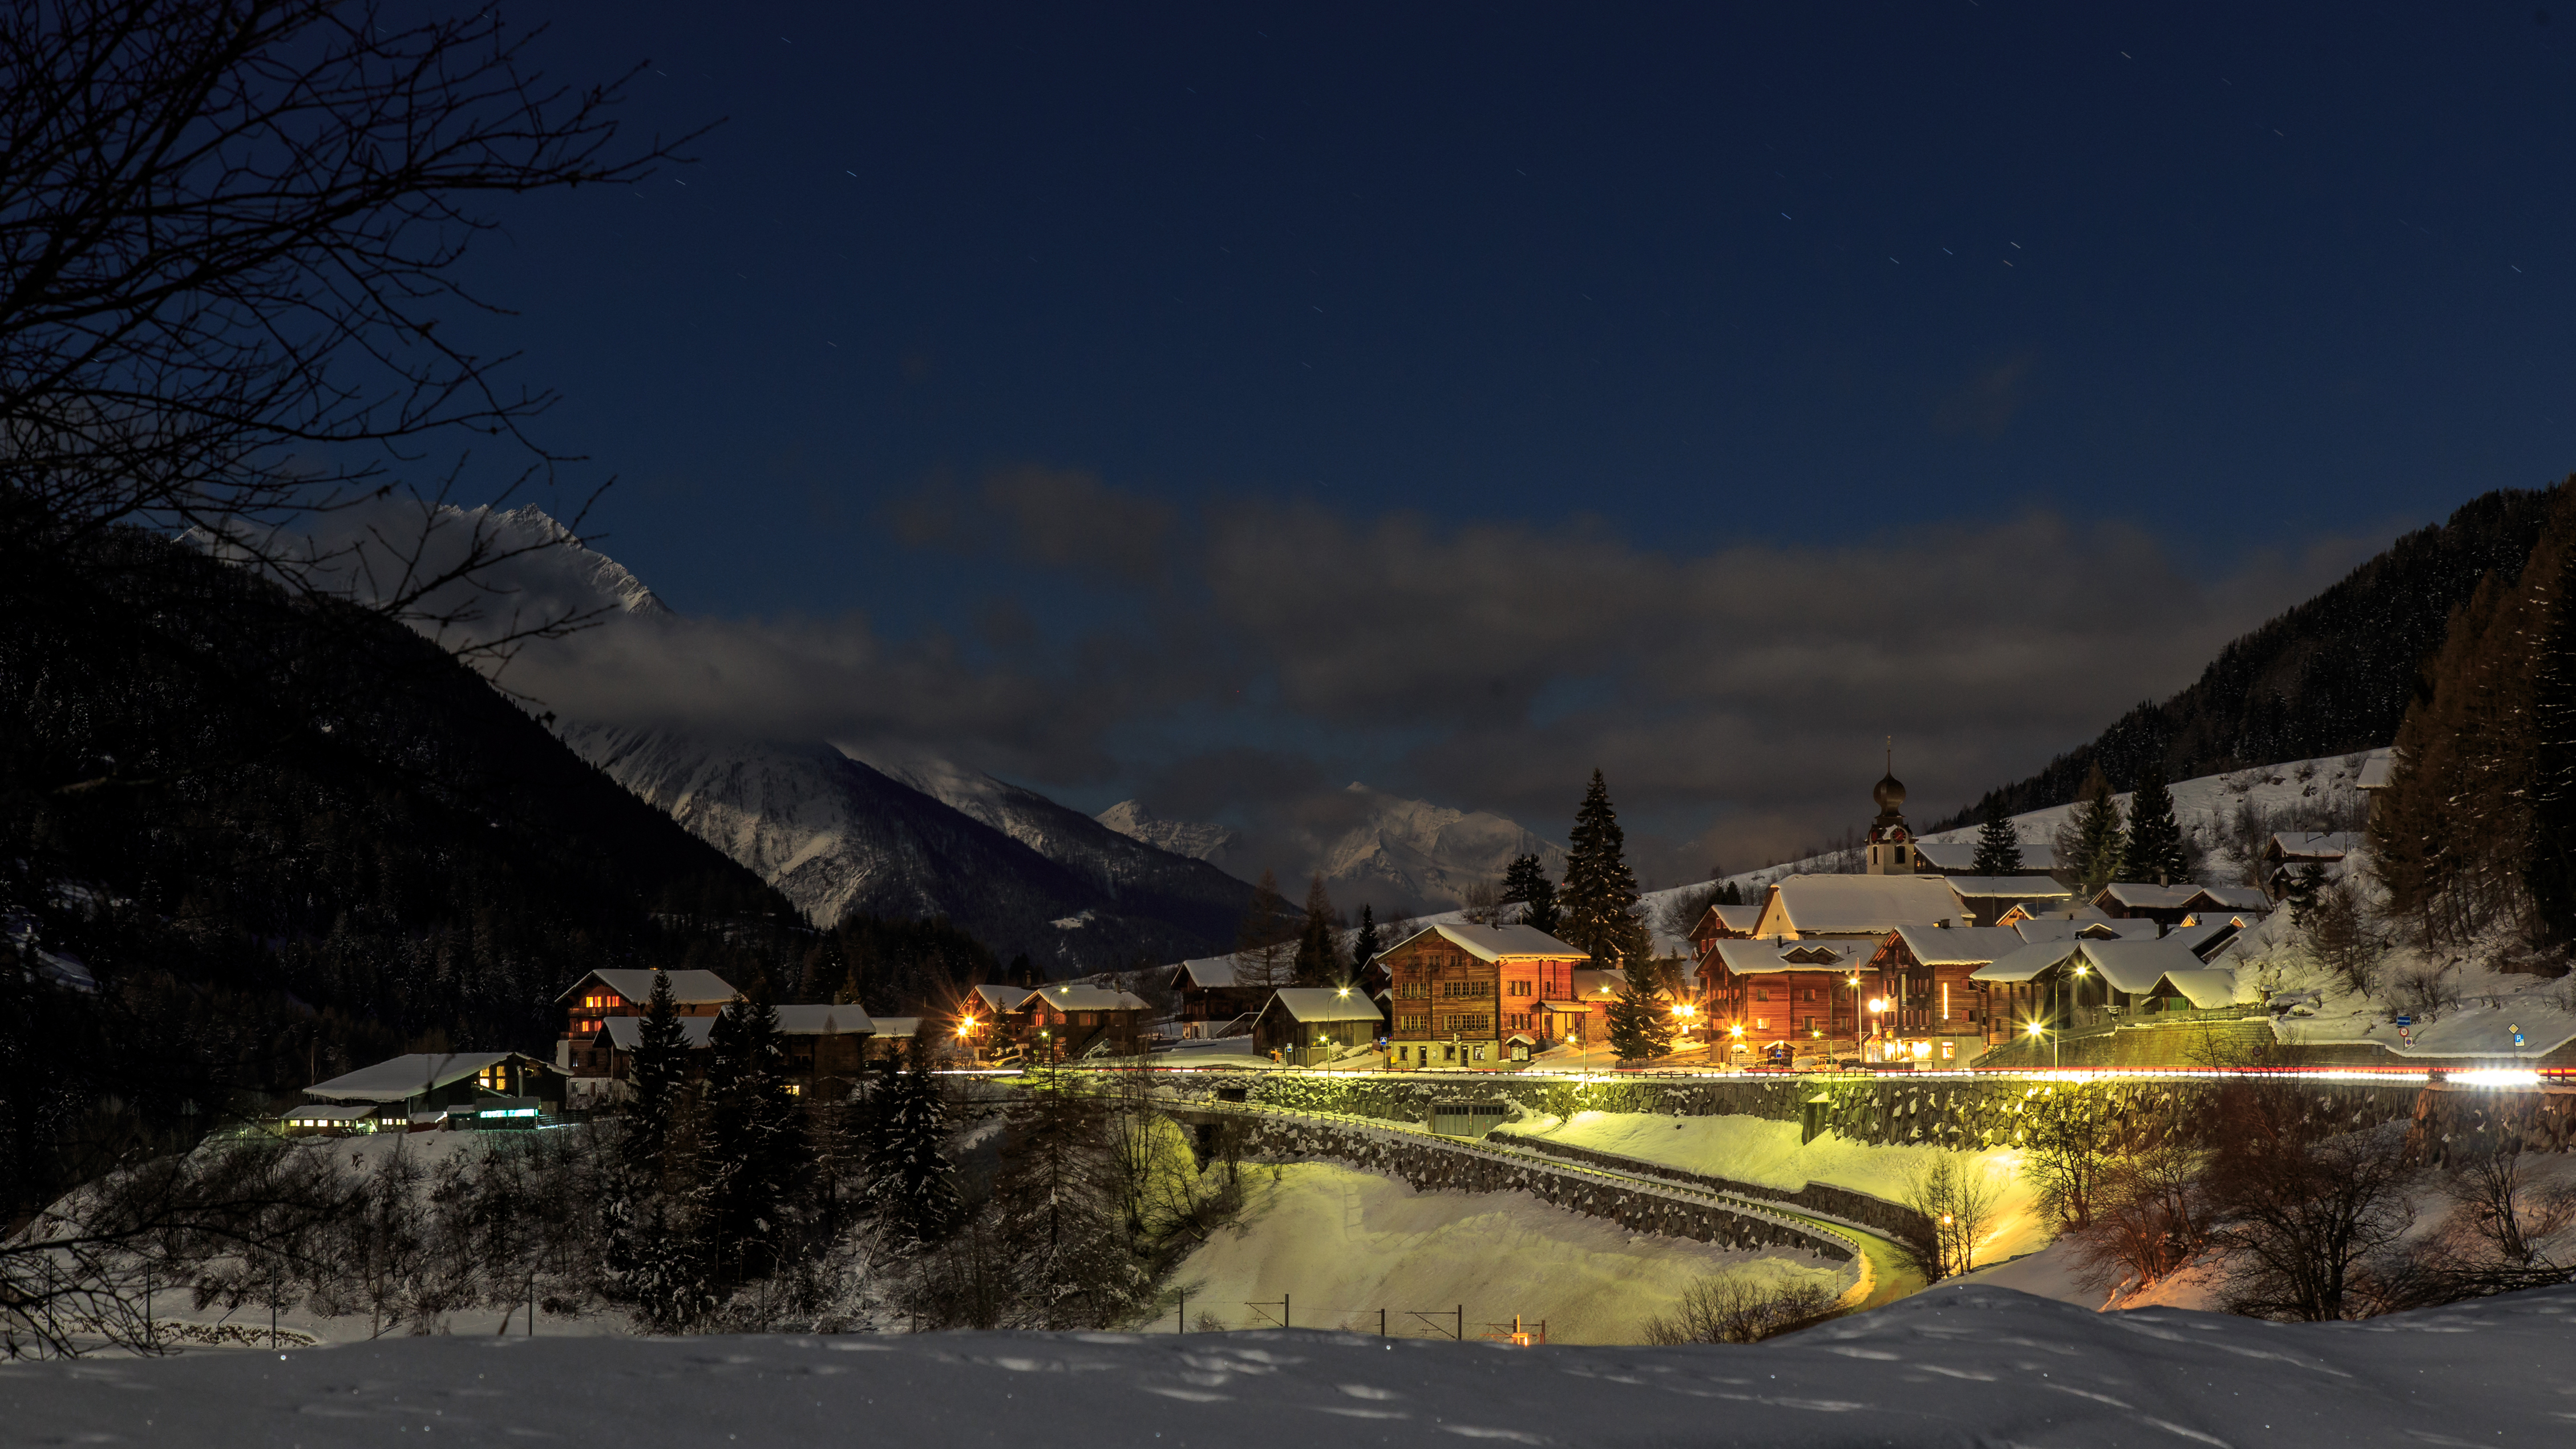 Winter Village In Switzerland 4k Ultra Hd Wallpaper Background Image